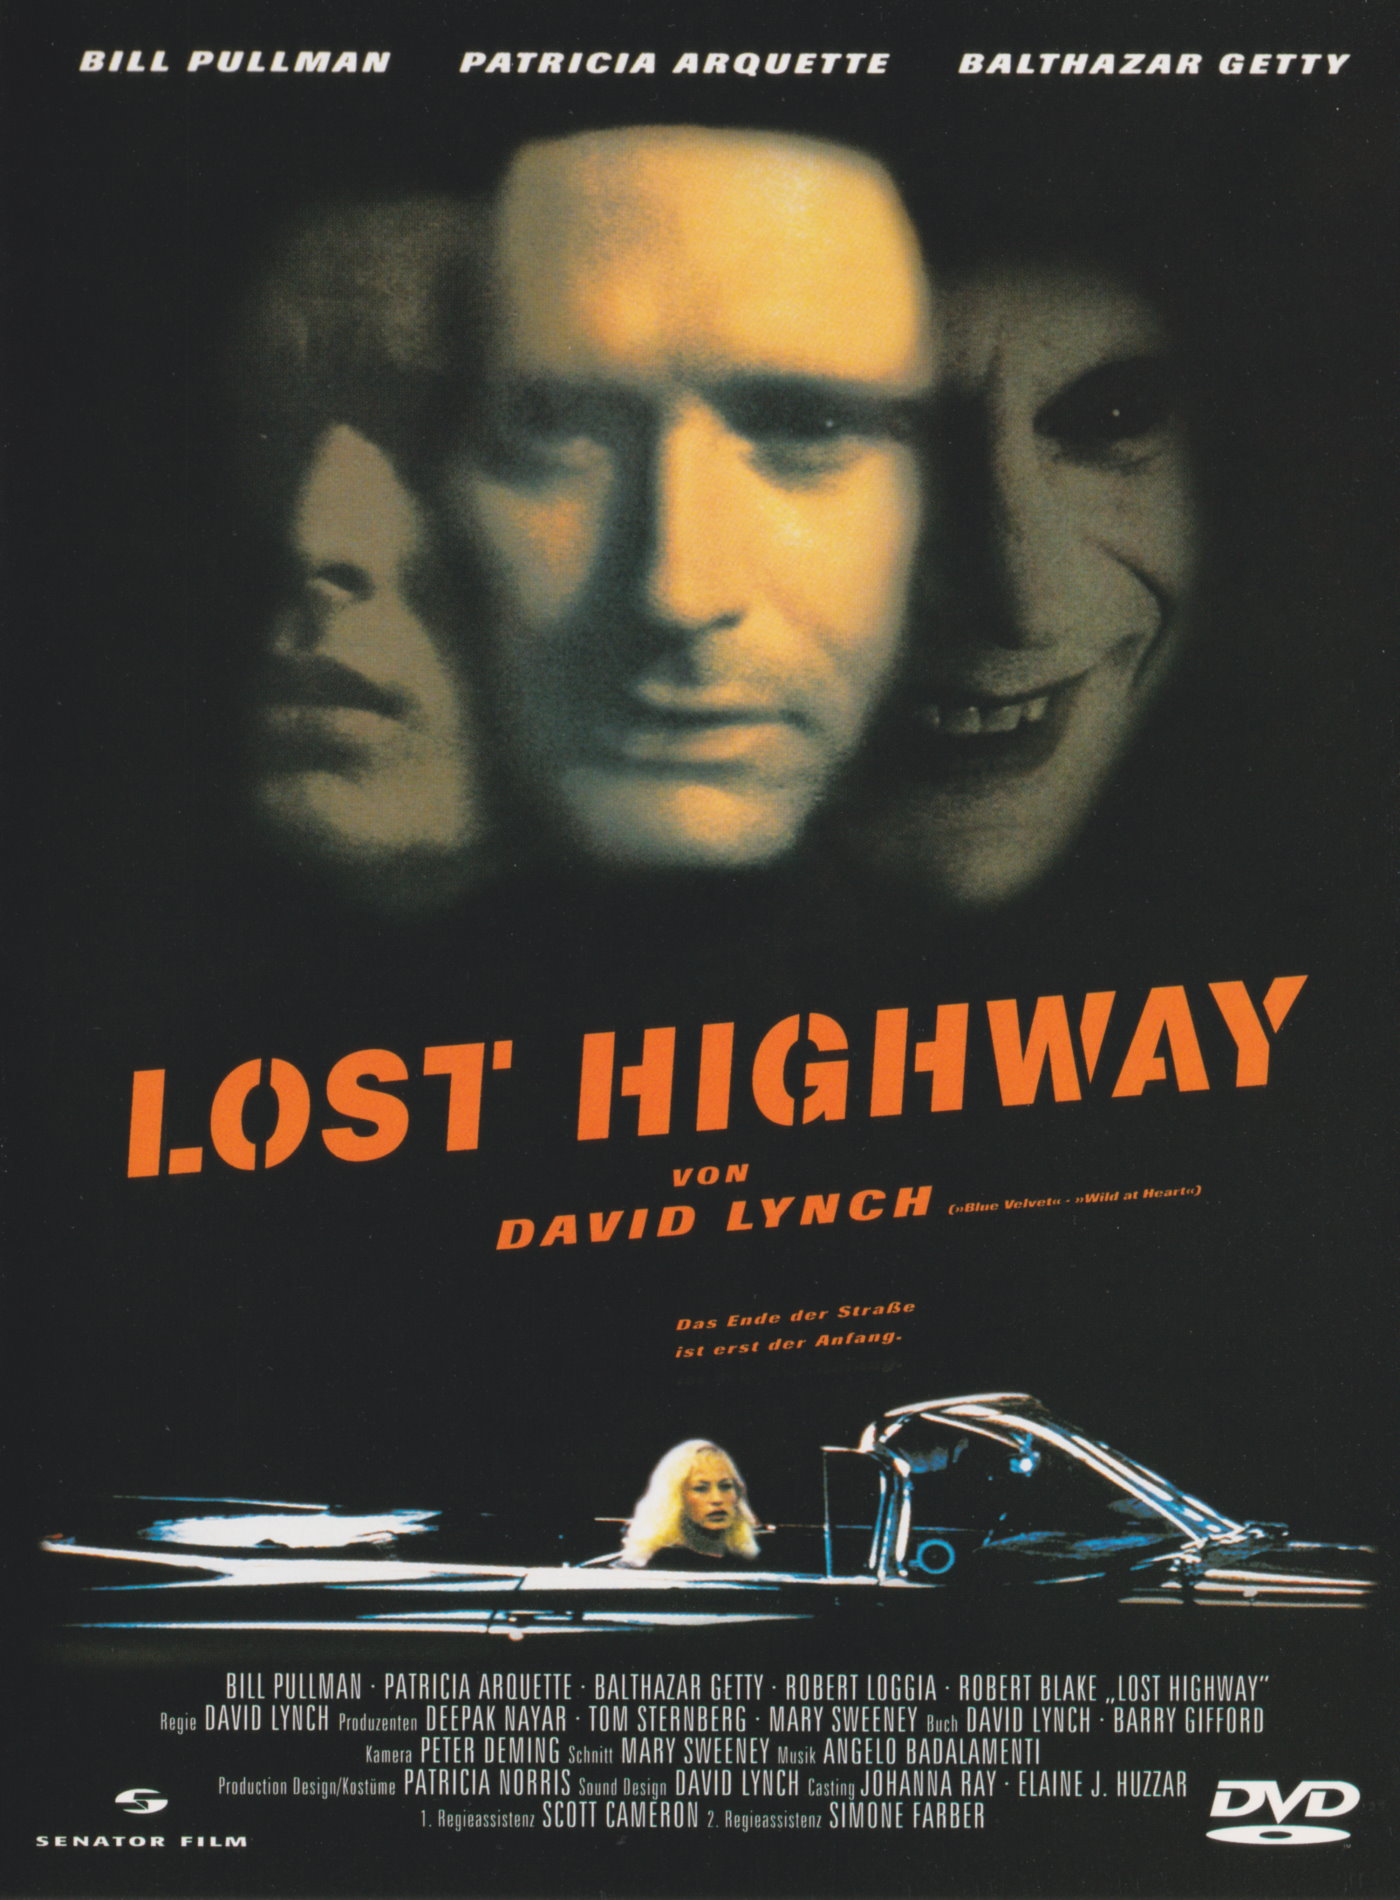 Cover - Lost Highway.jpg